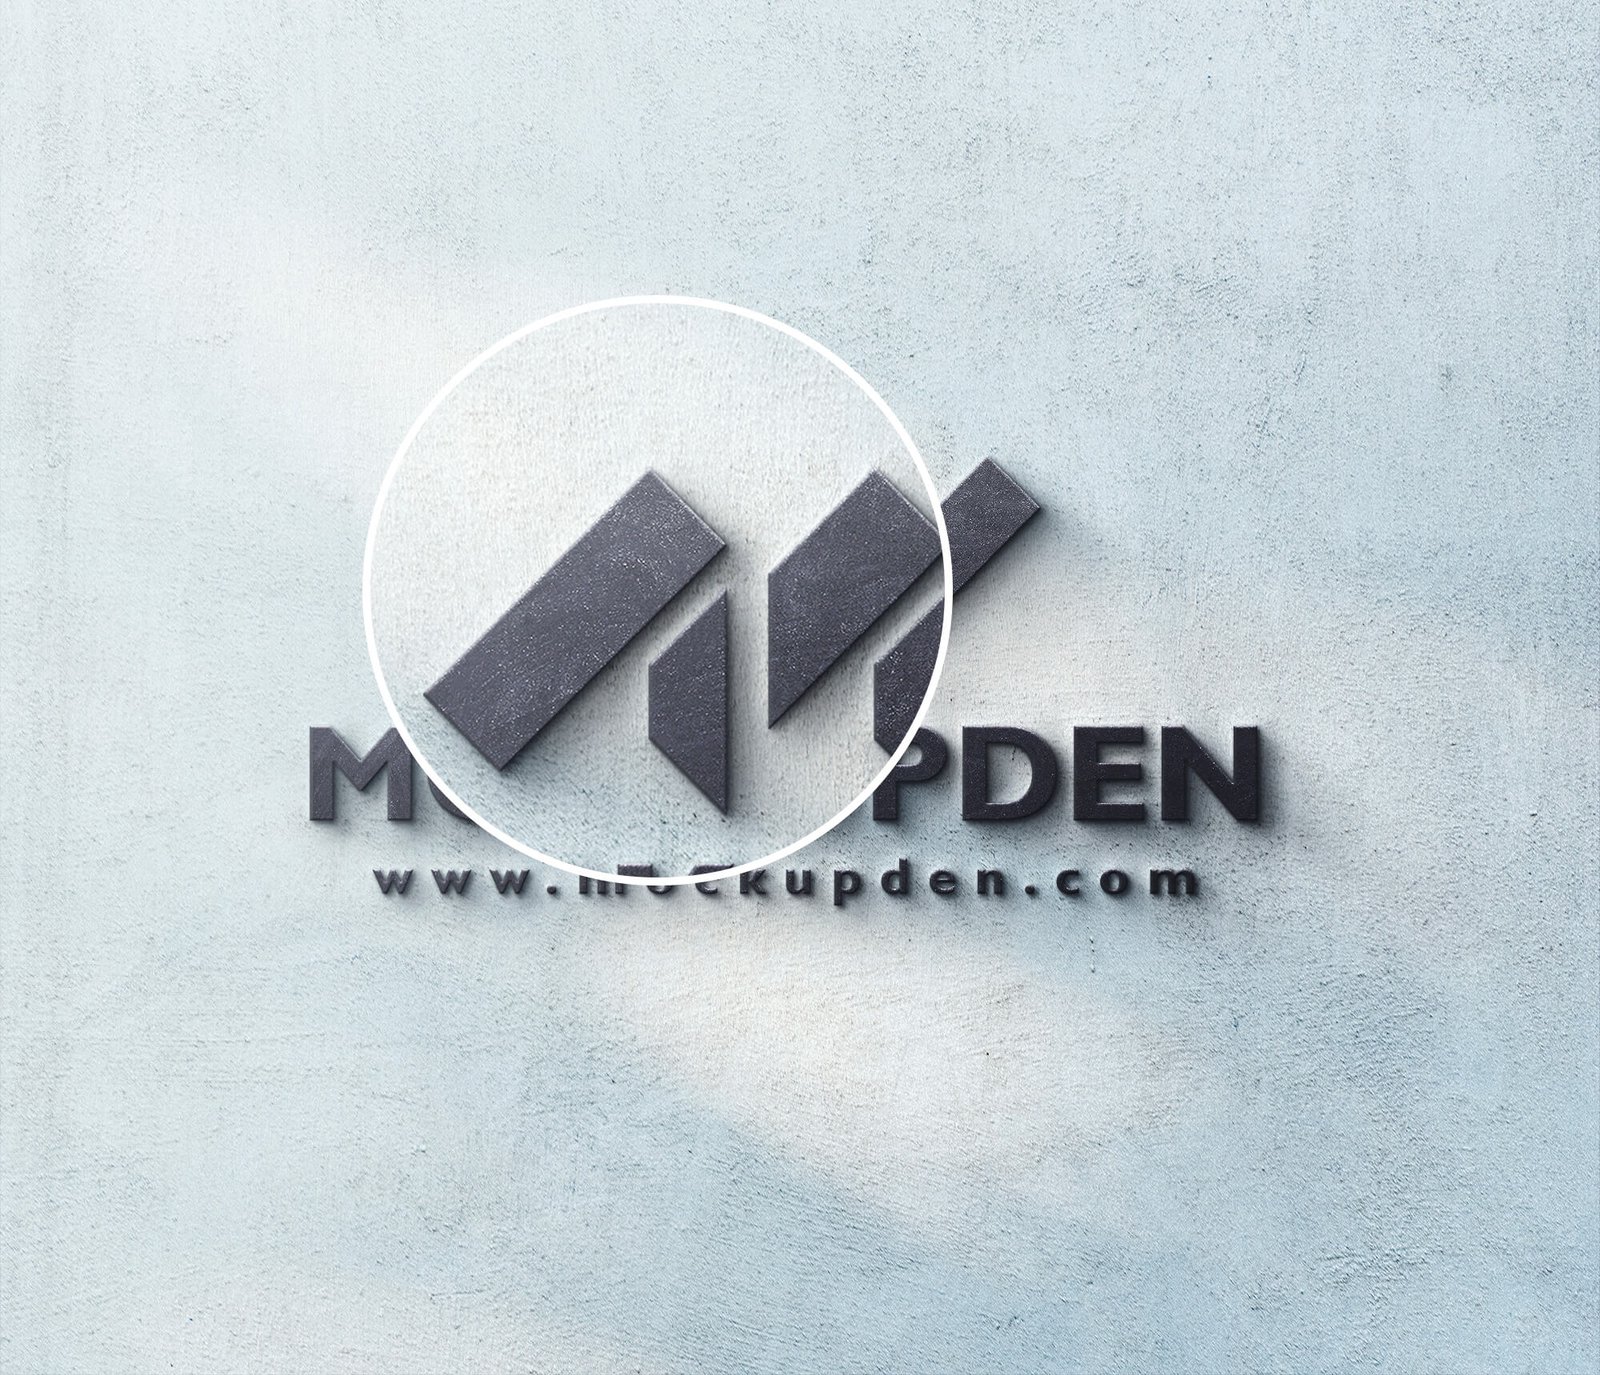 3d wall logo mockup psd file free download